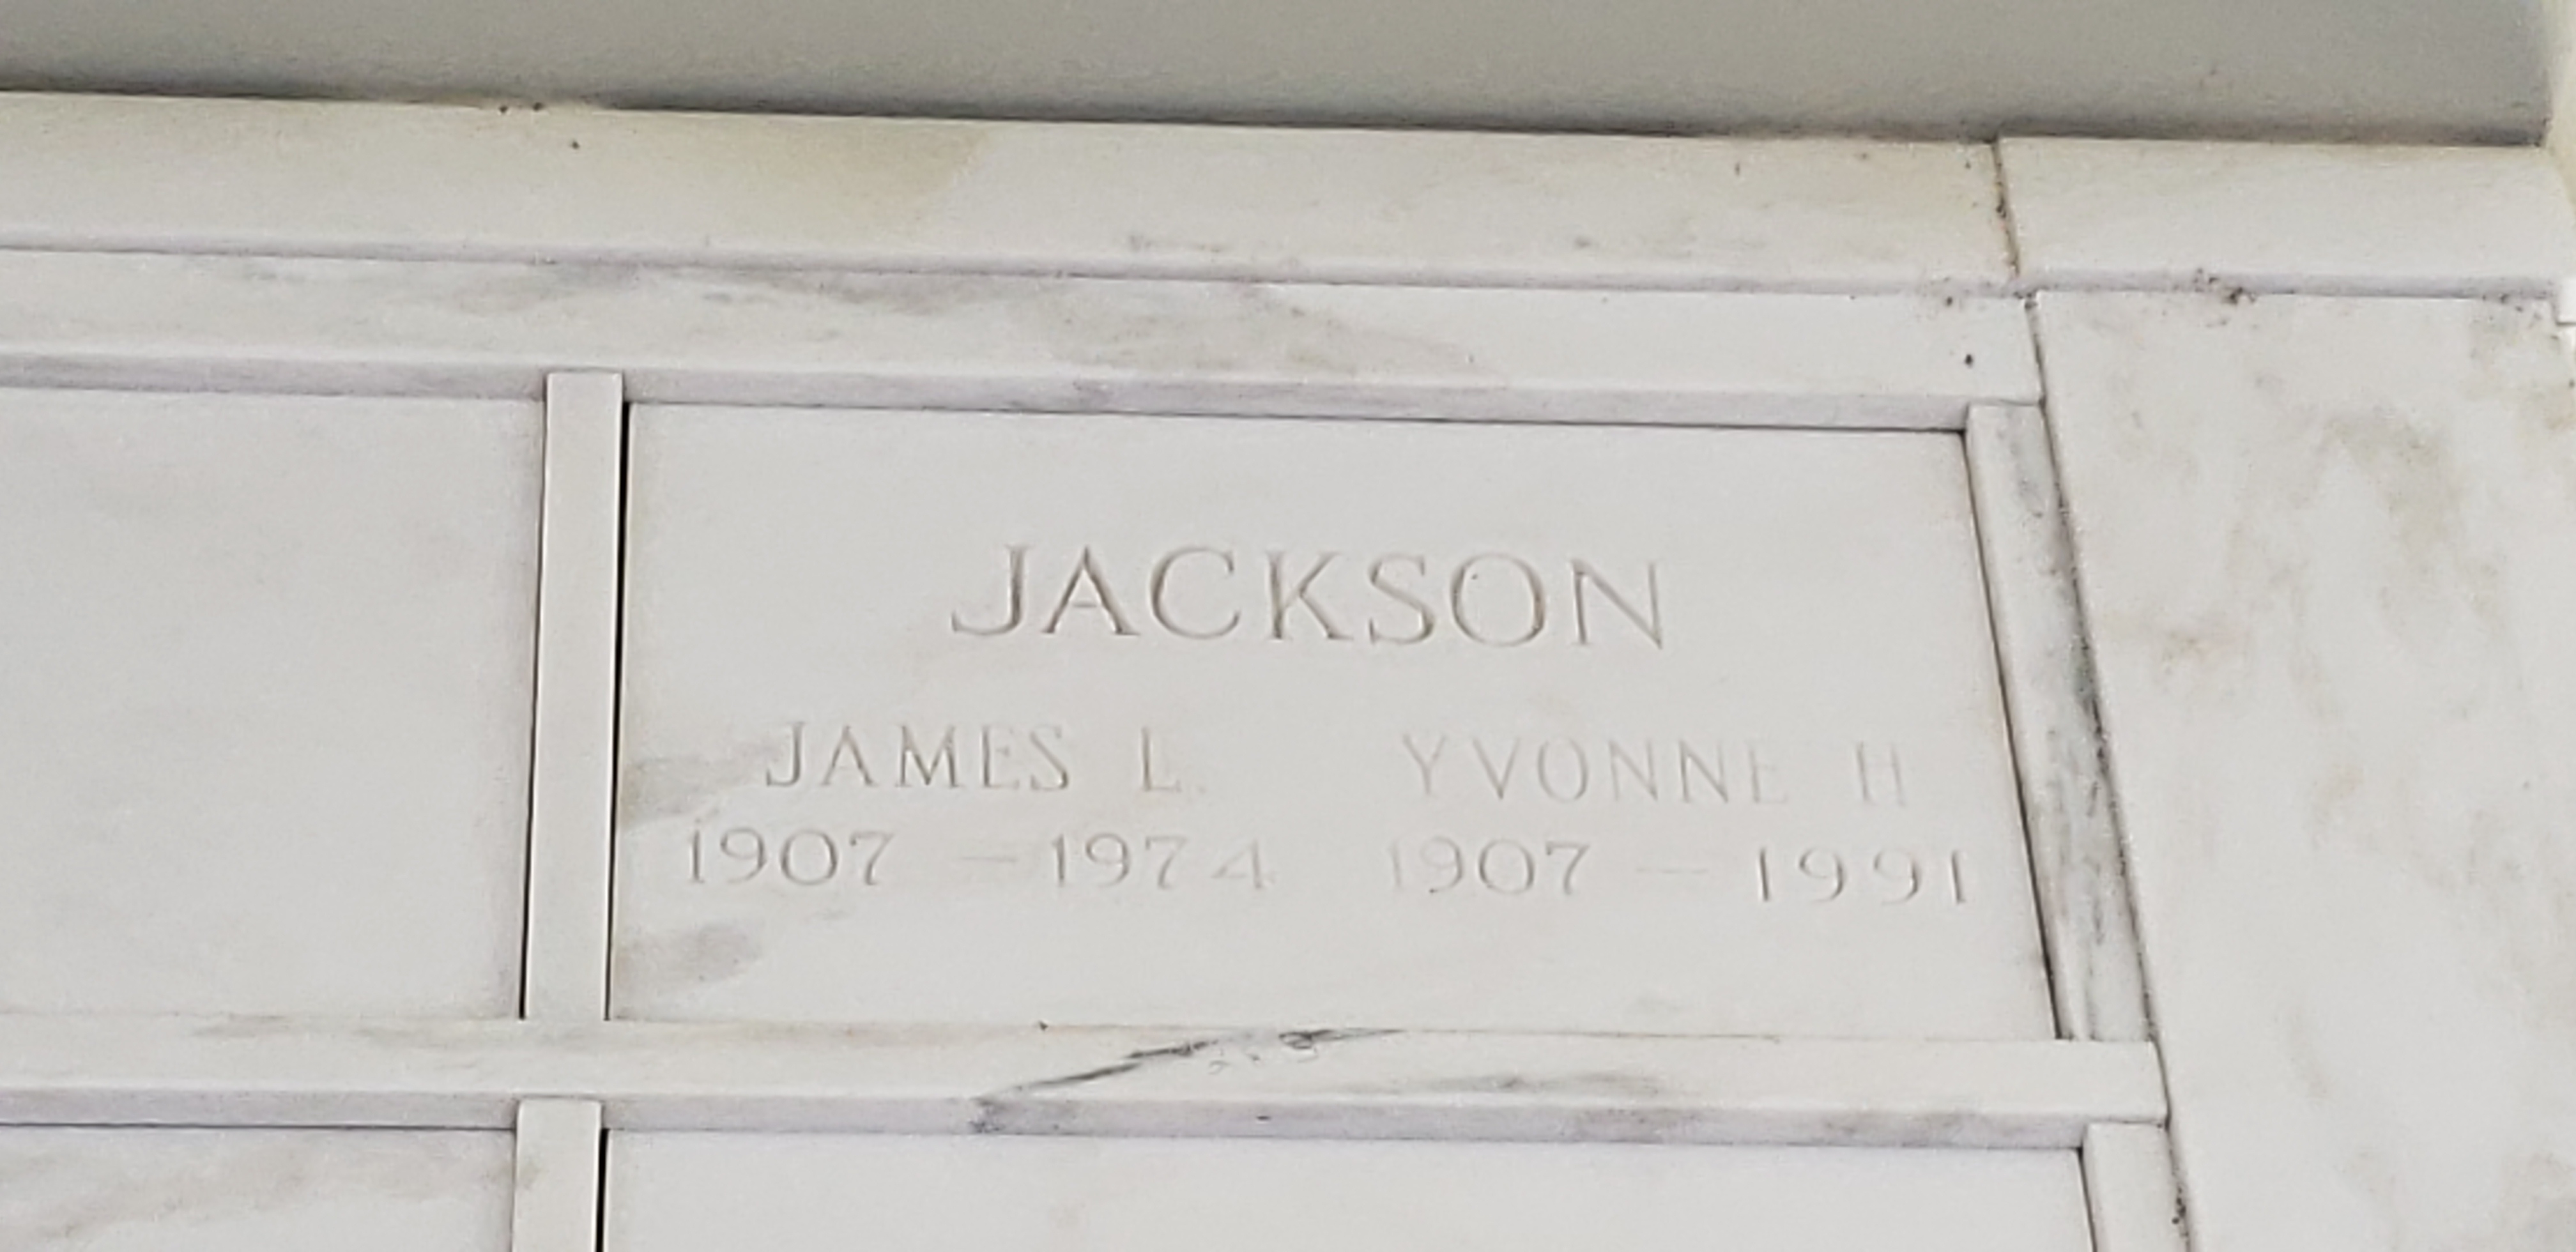 James L Jackson